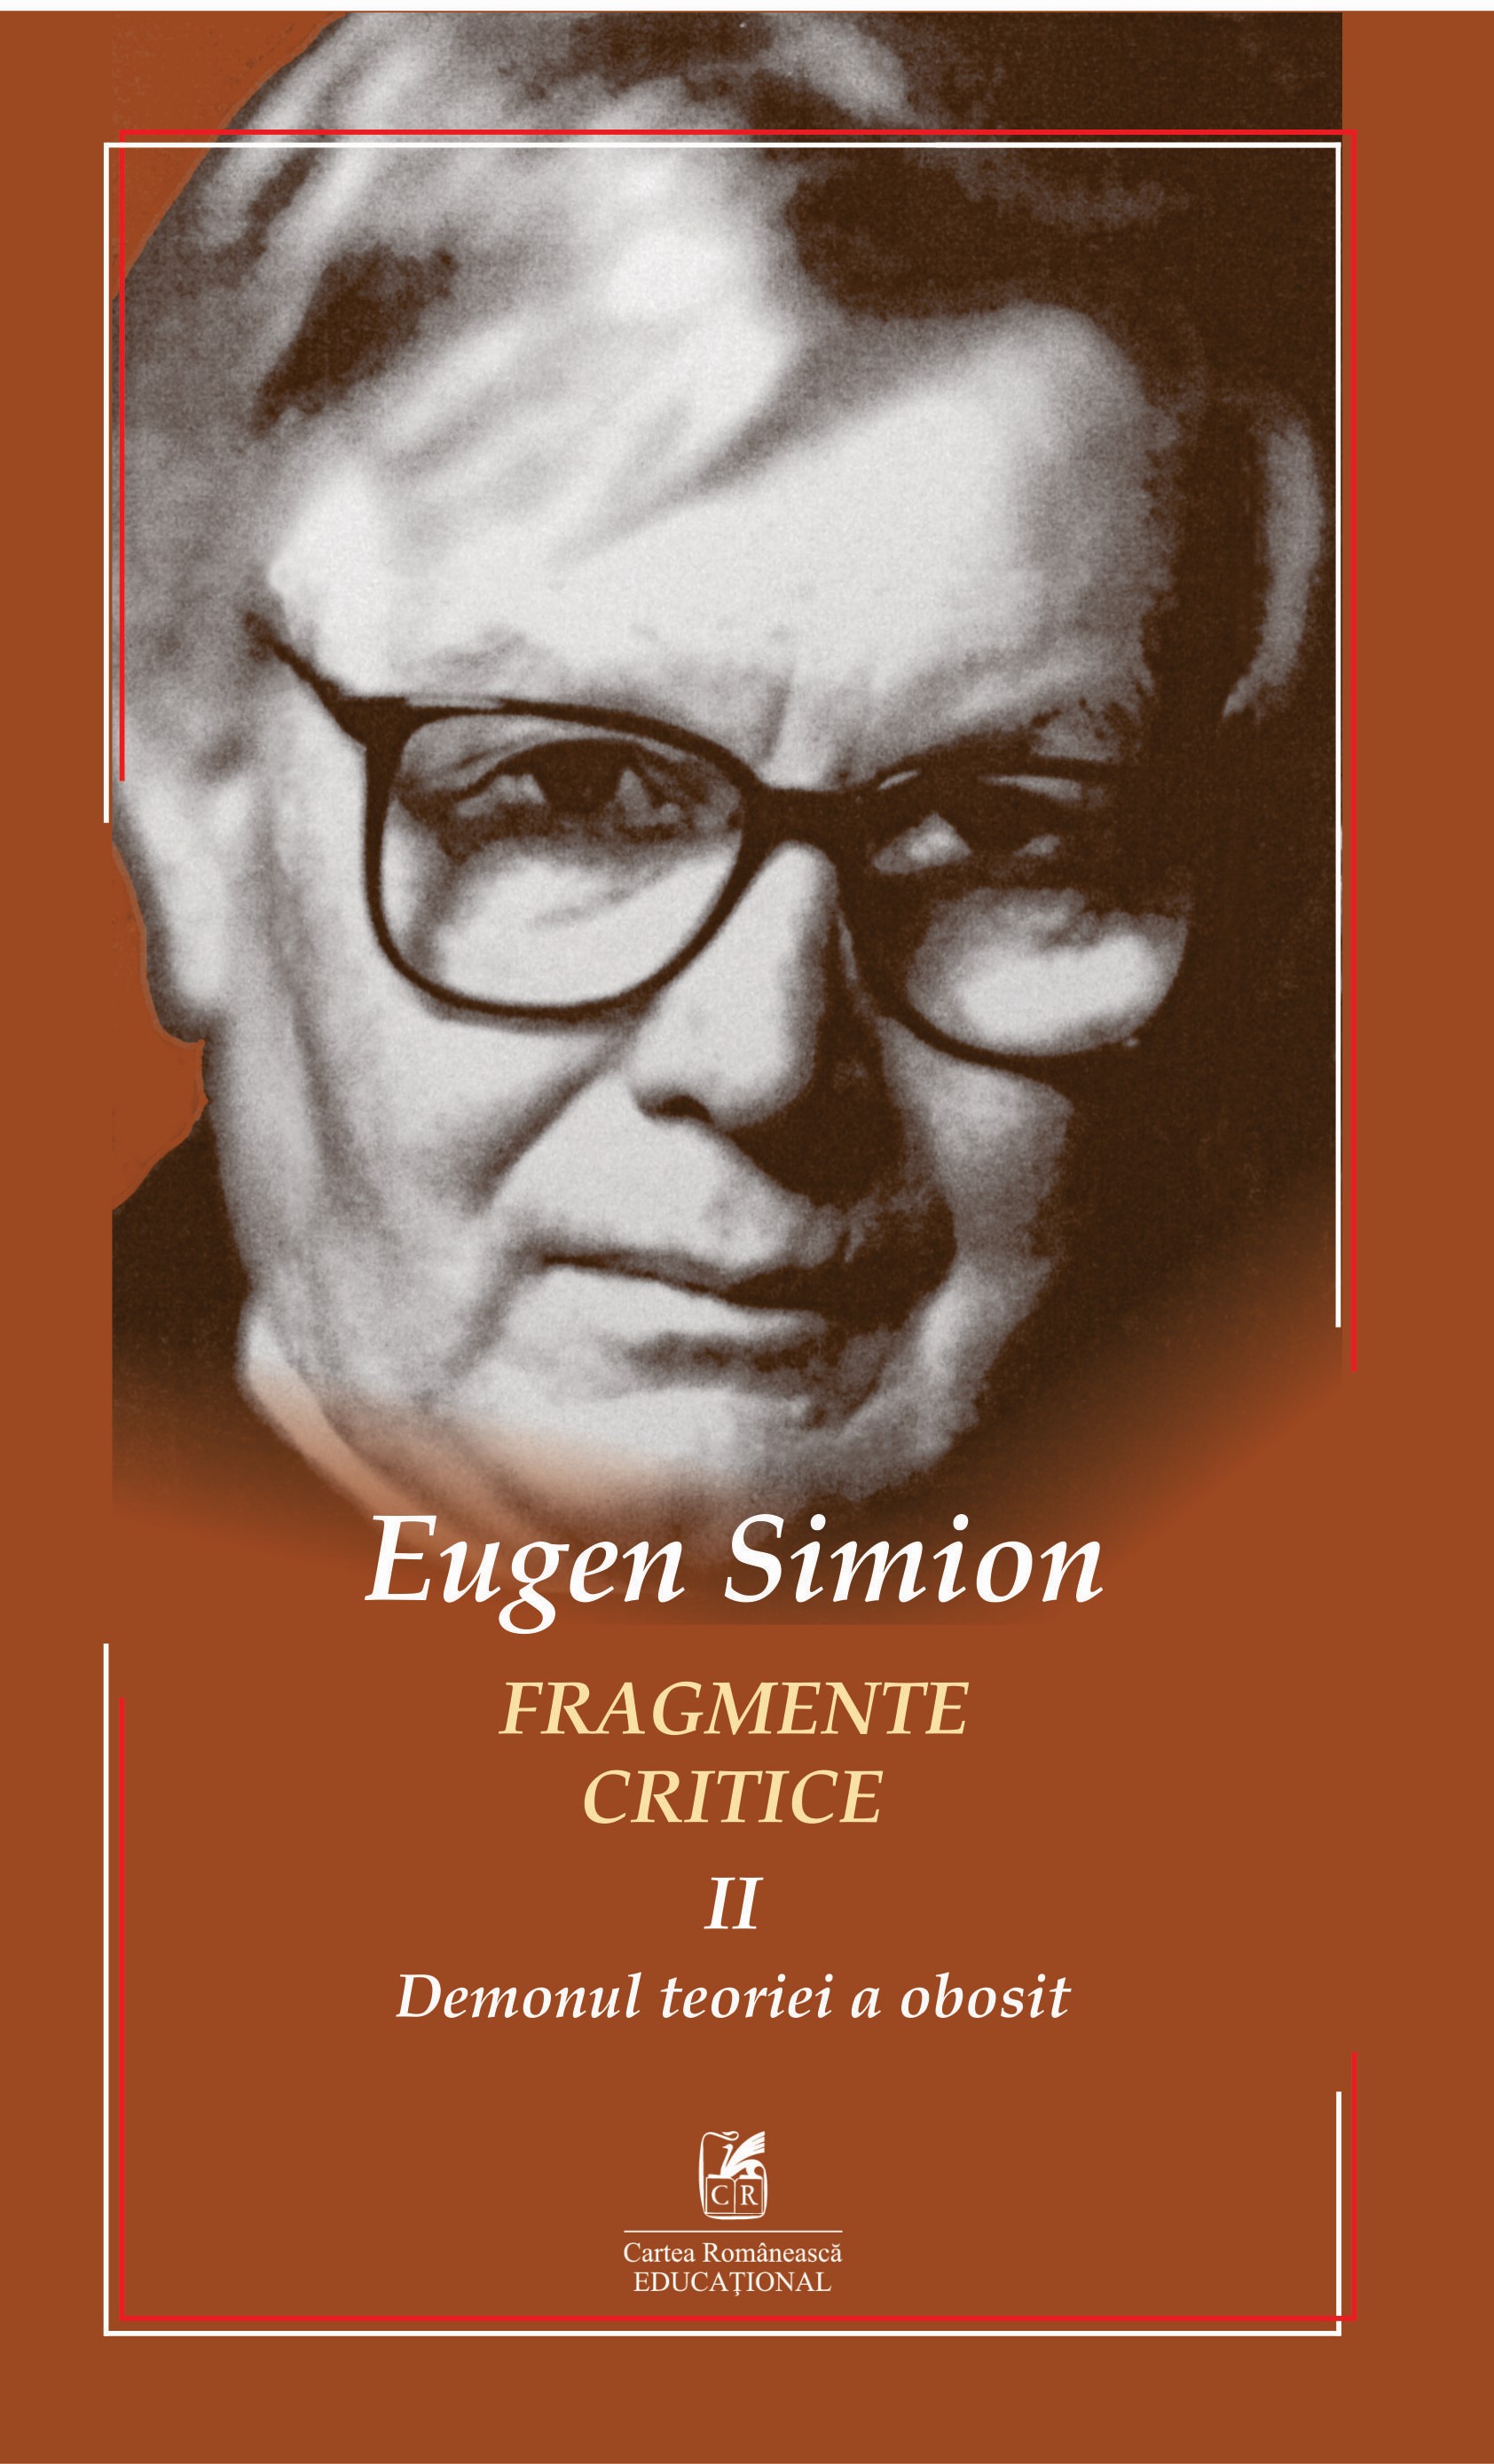 Fragmente critice | Eugen Simion Cartea Romaneasca educational poza bestsellers.ro